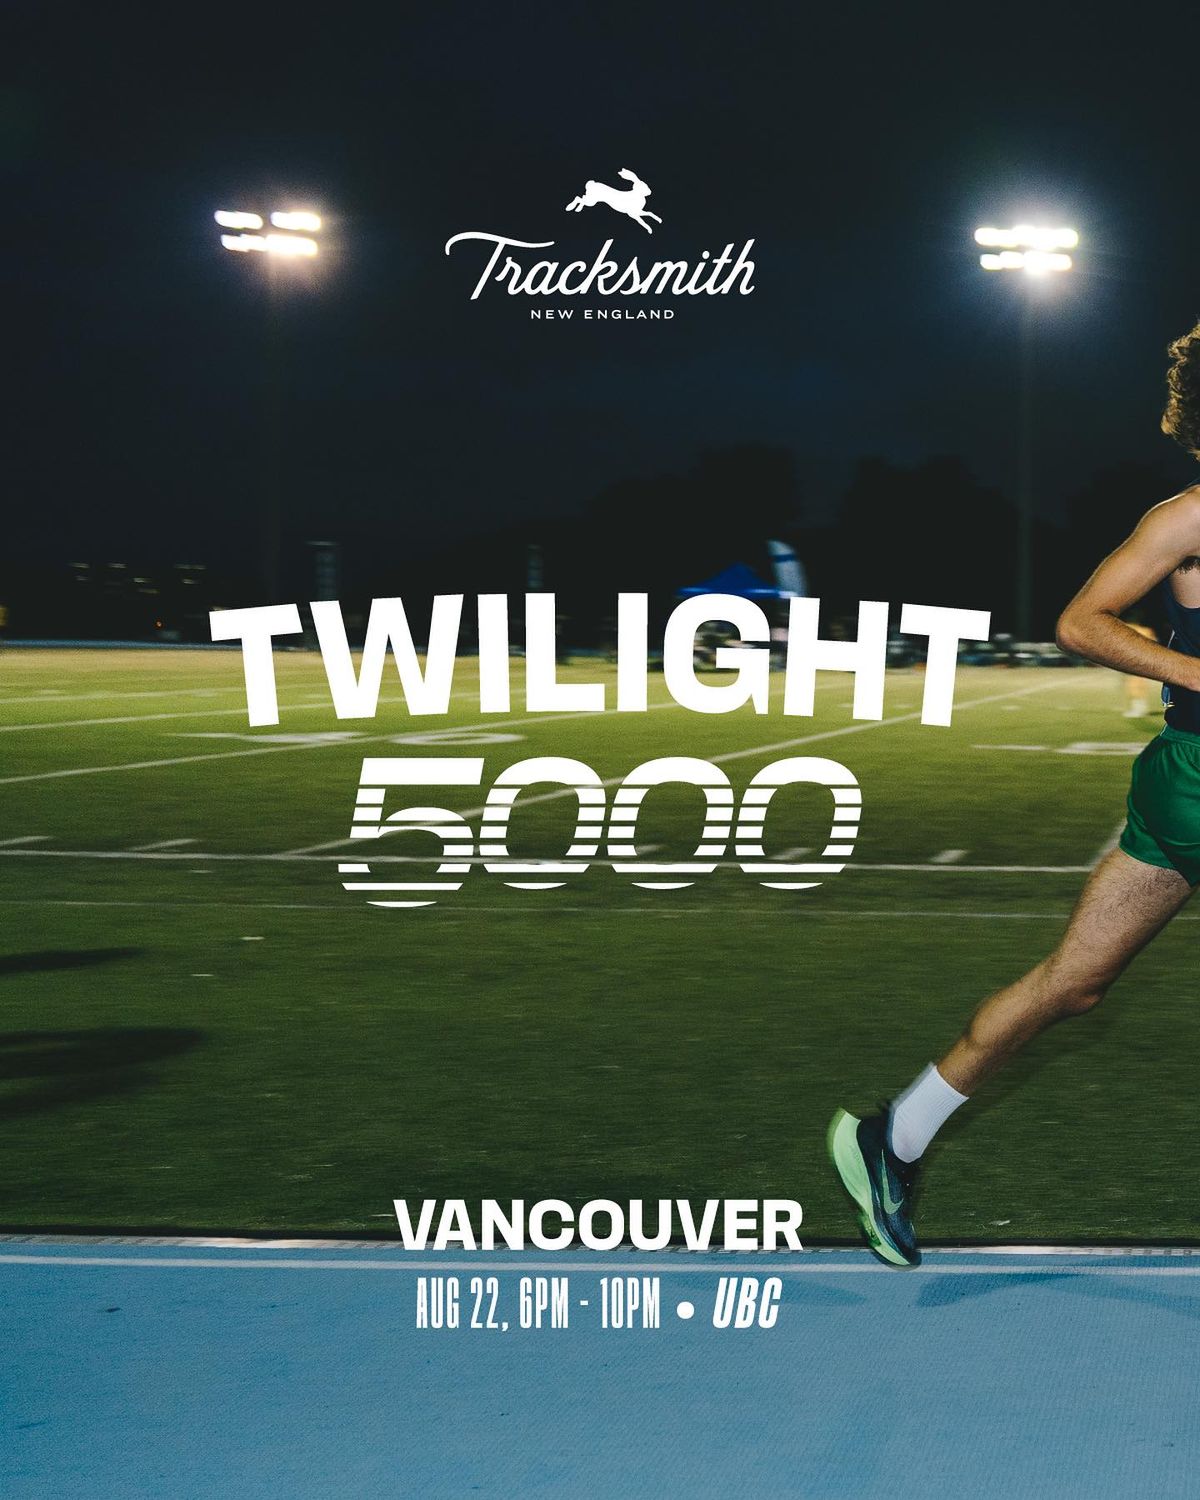 Vancouver Tracksmith Twilight 5000